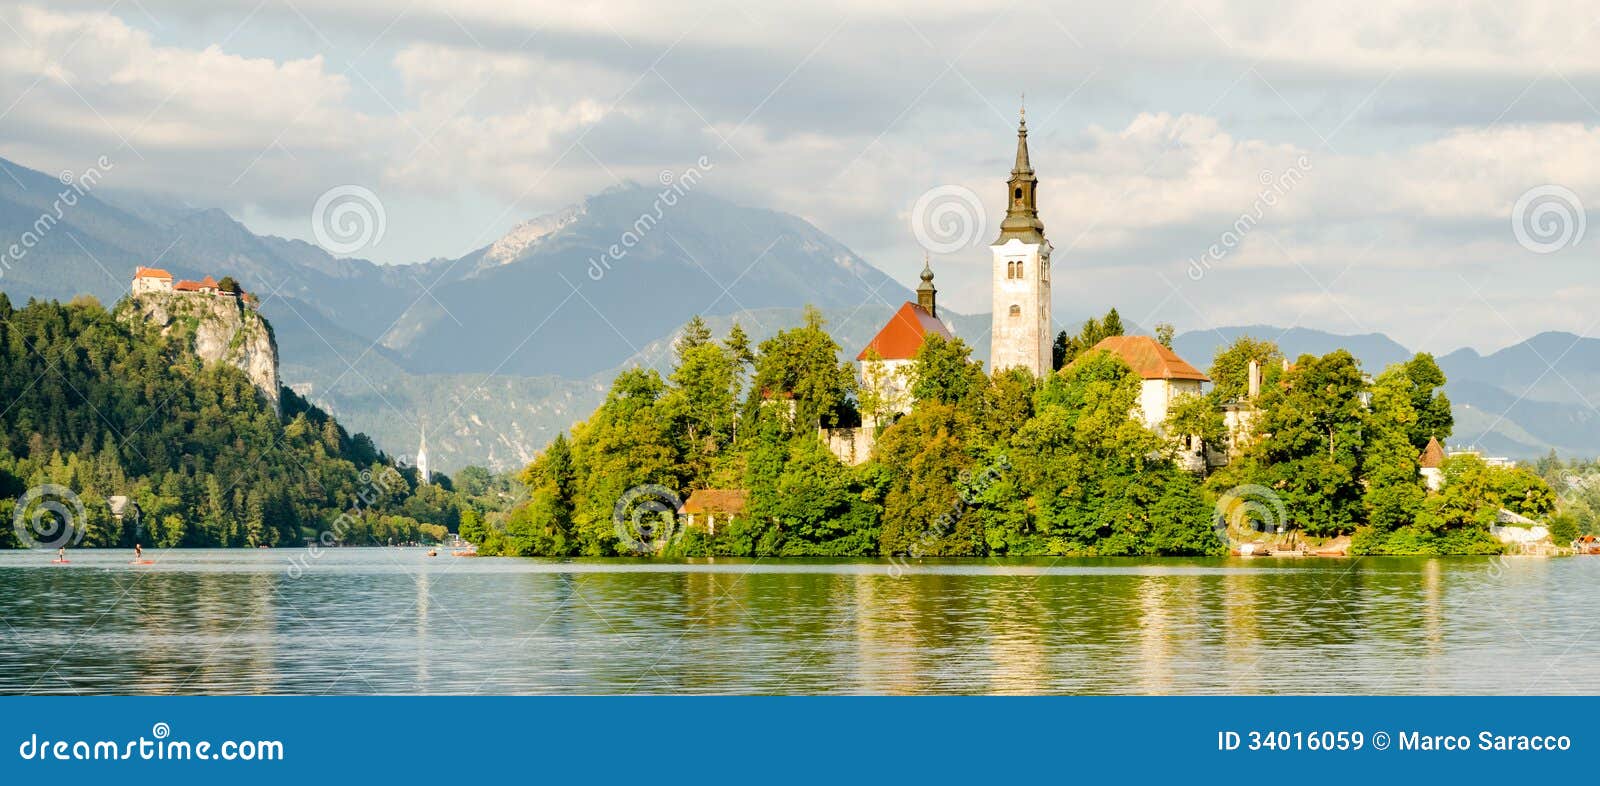 lake bled, island and castle, slovenia